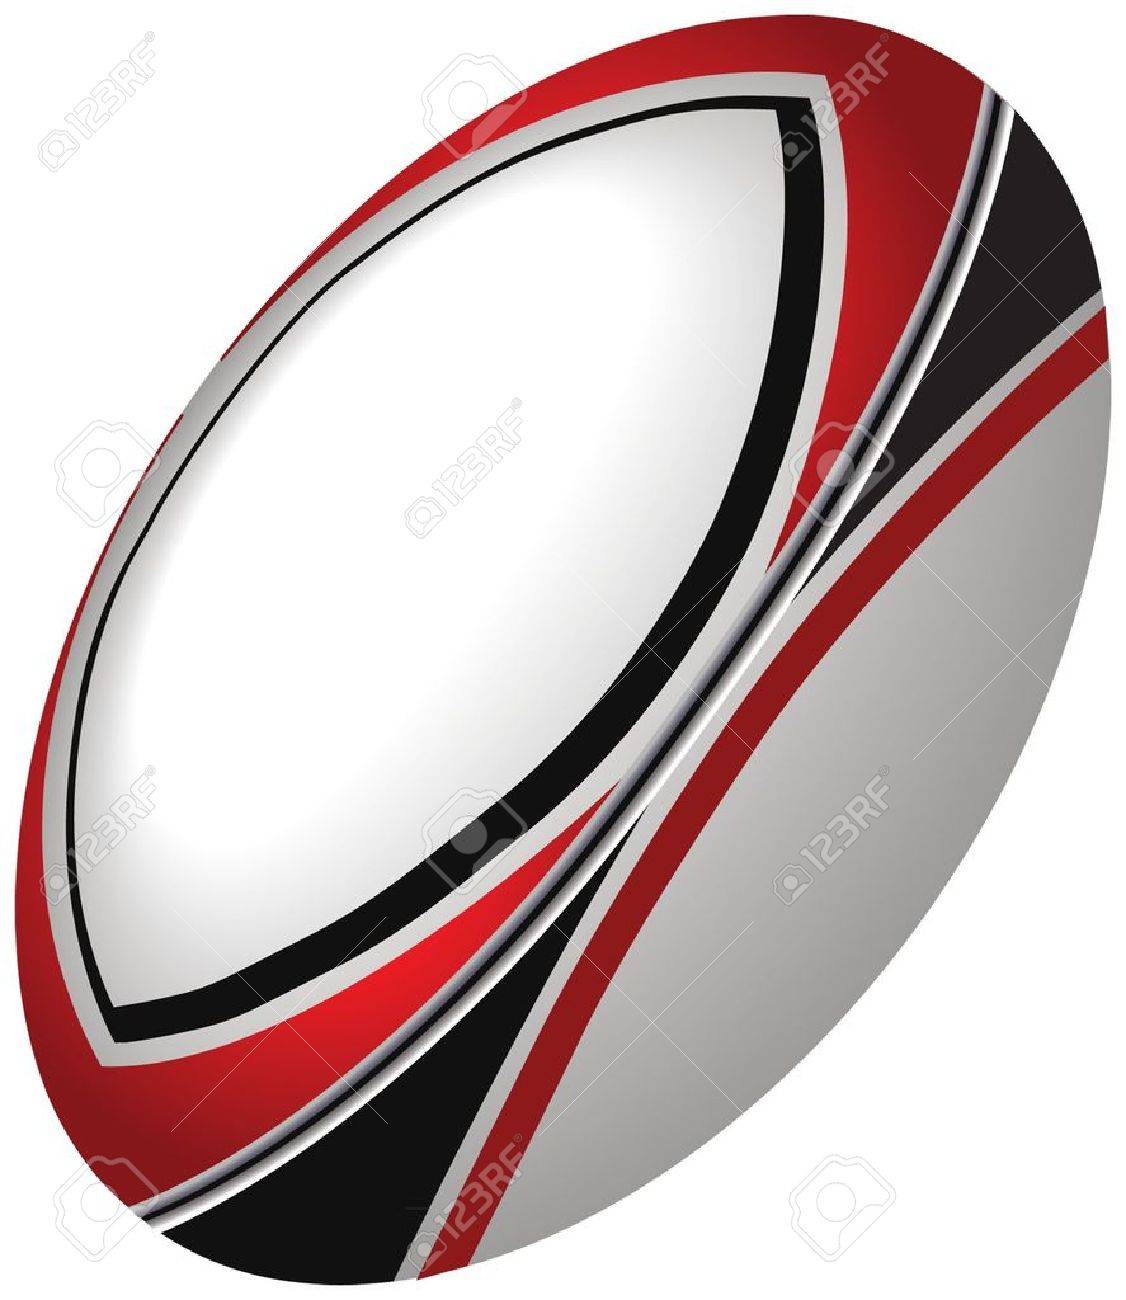 Ball clipart rugby league